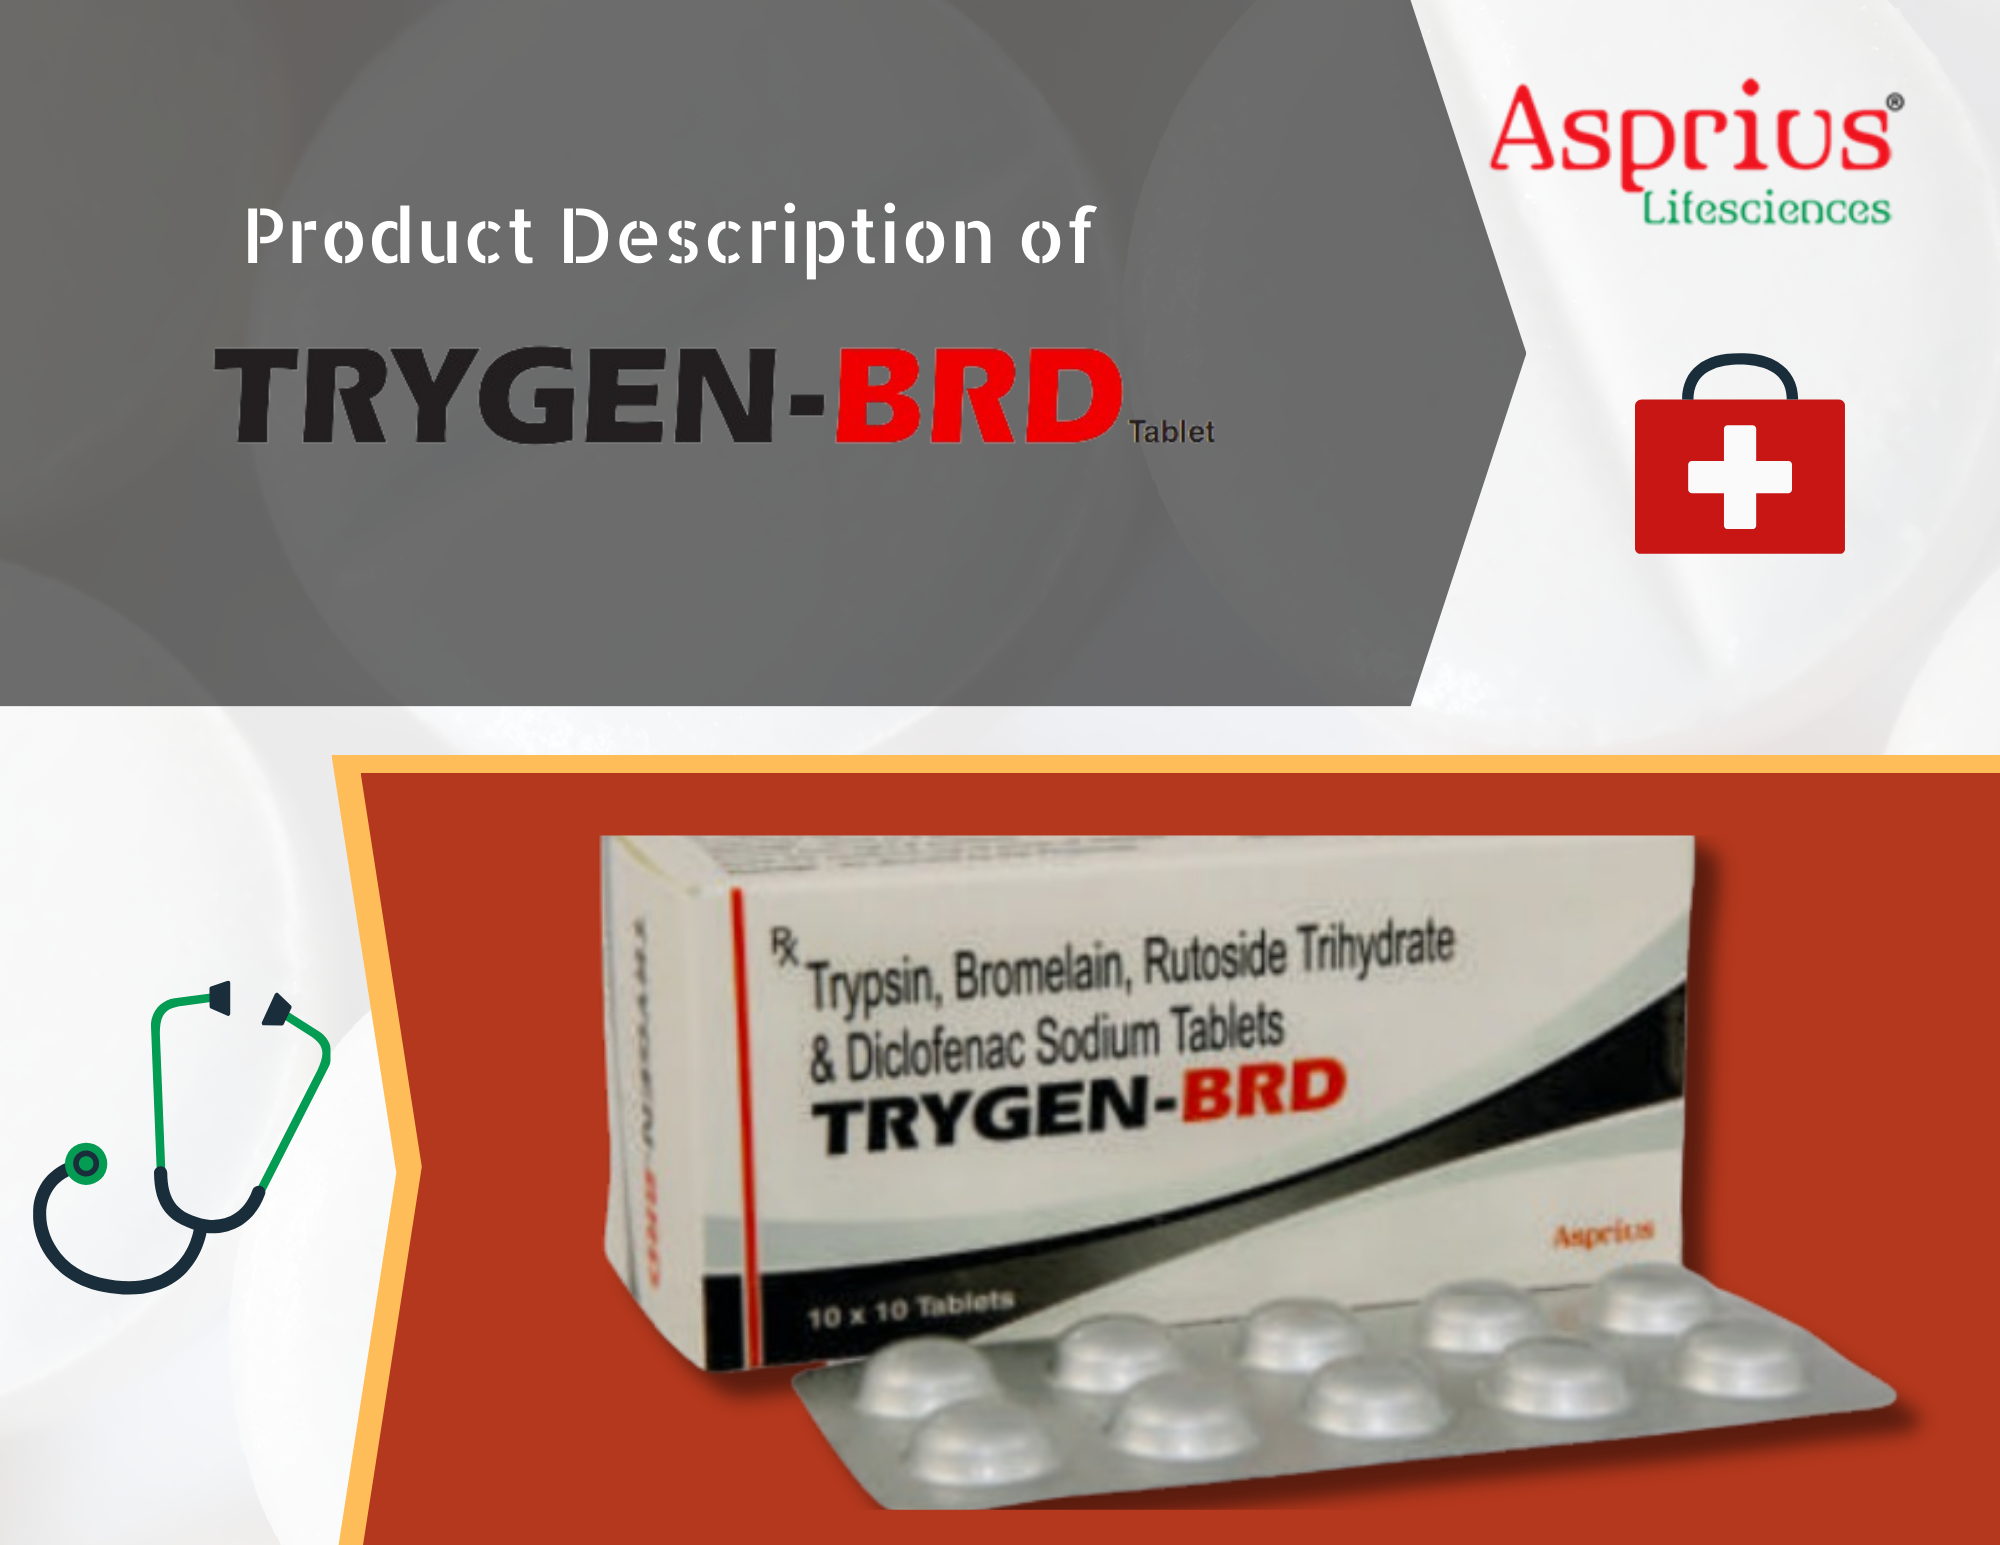 Brief Product Information on TRYGEN-BRD